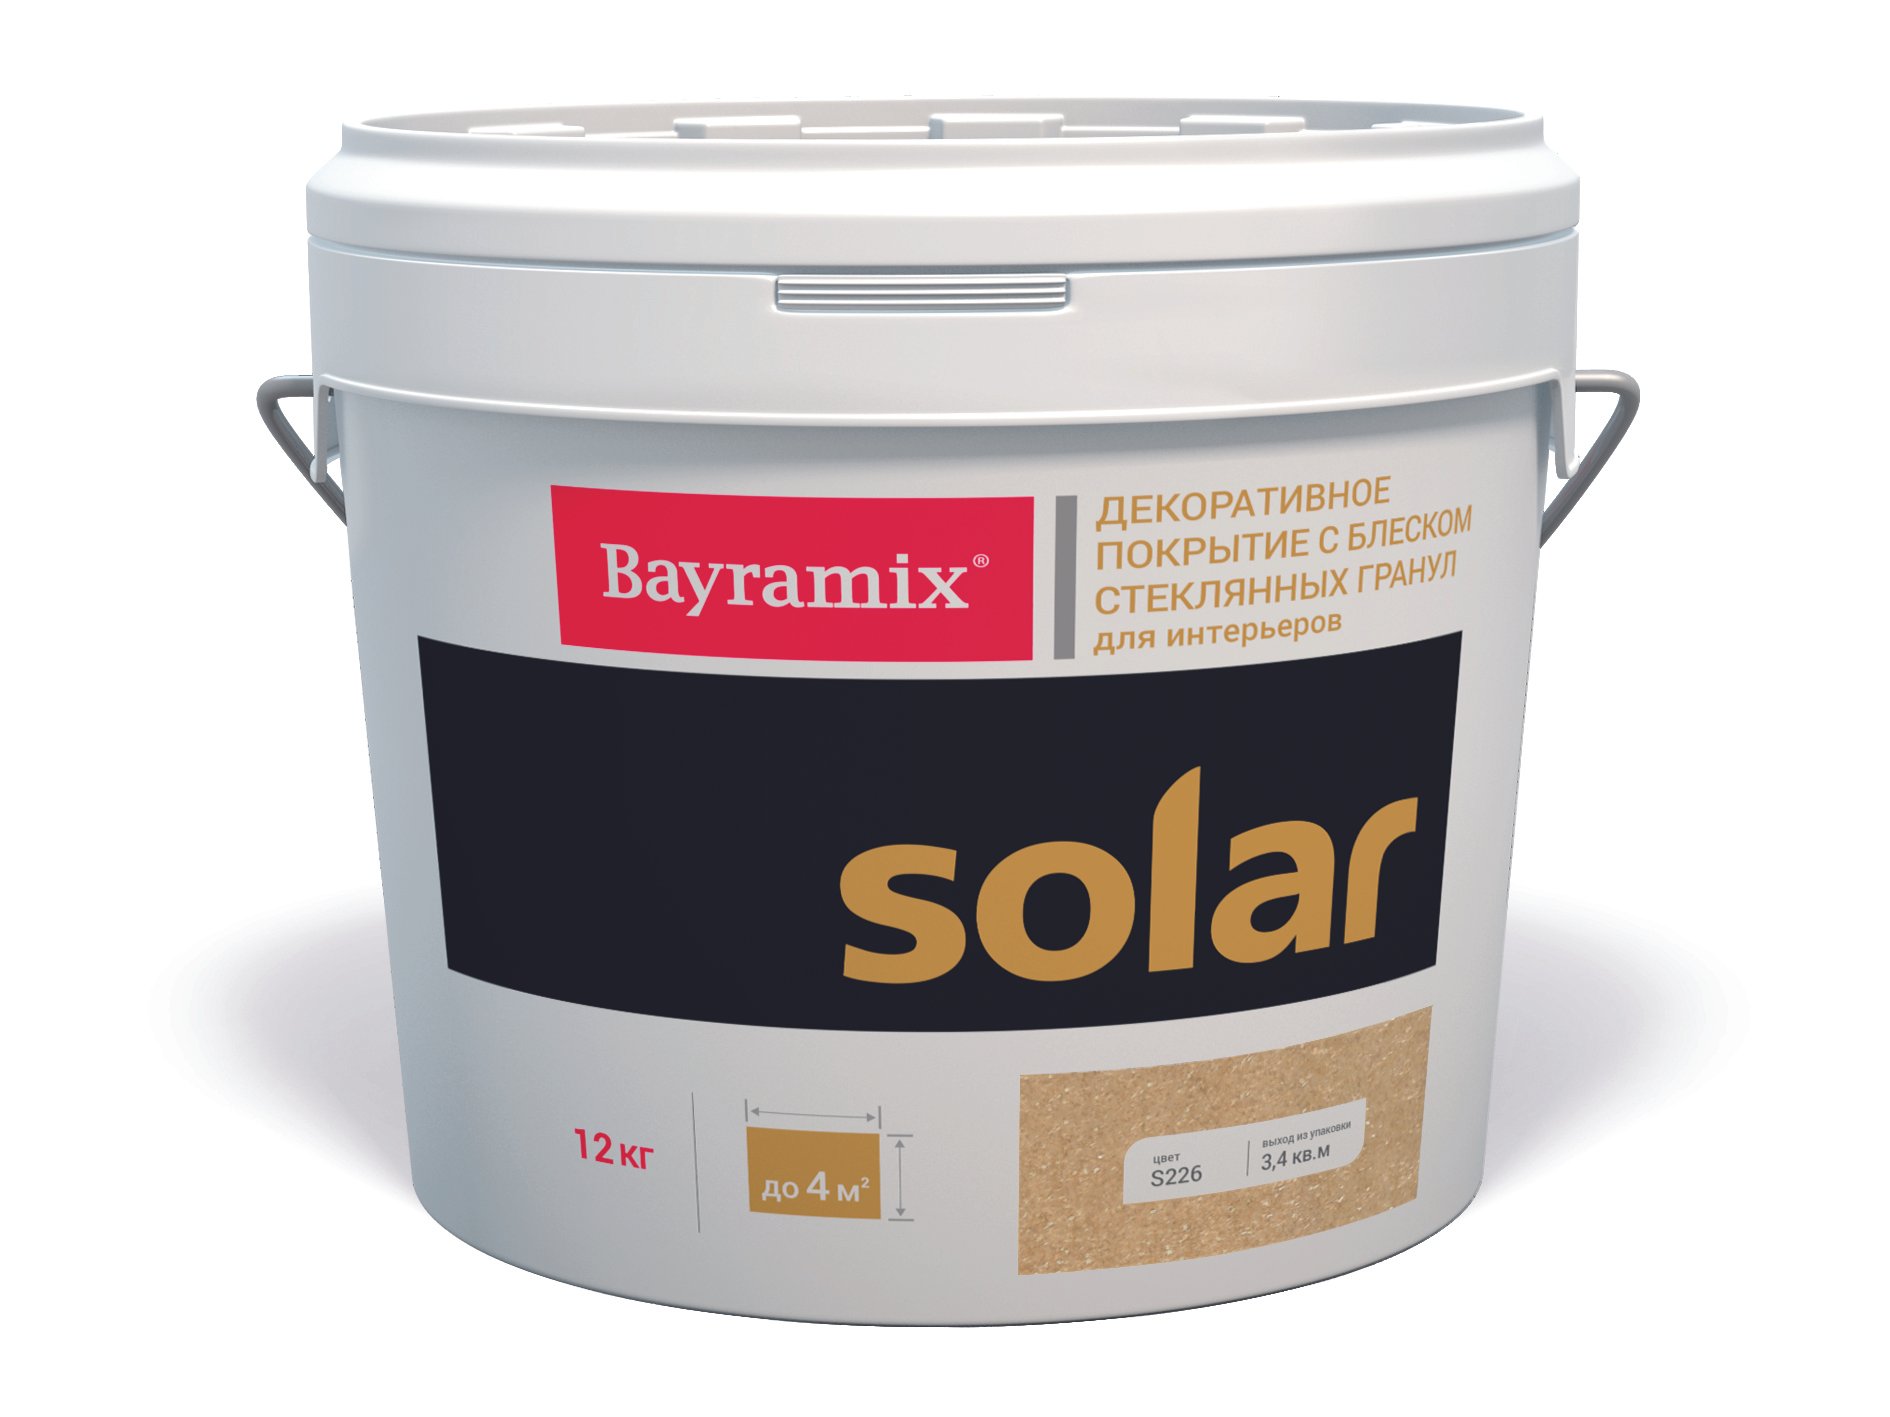 Декоративная шукатурка со стекл. гранулами Bayramix Solar S261 миндаль, 12 кг